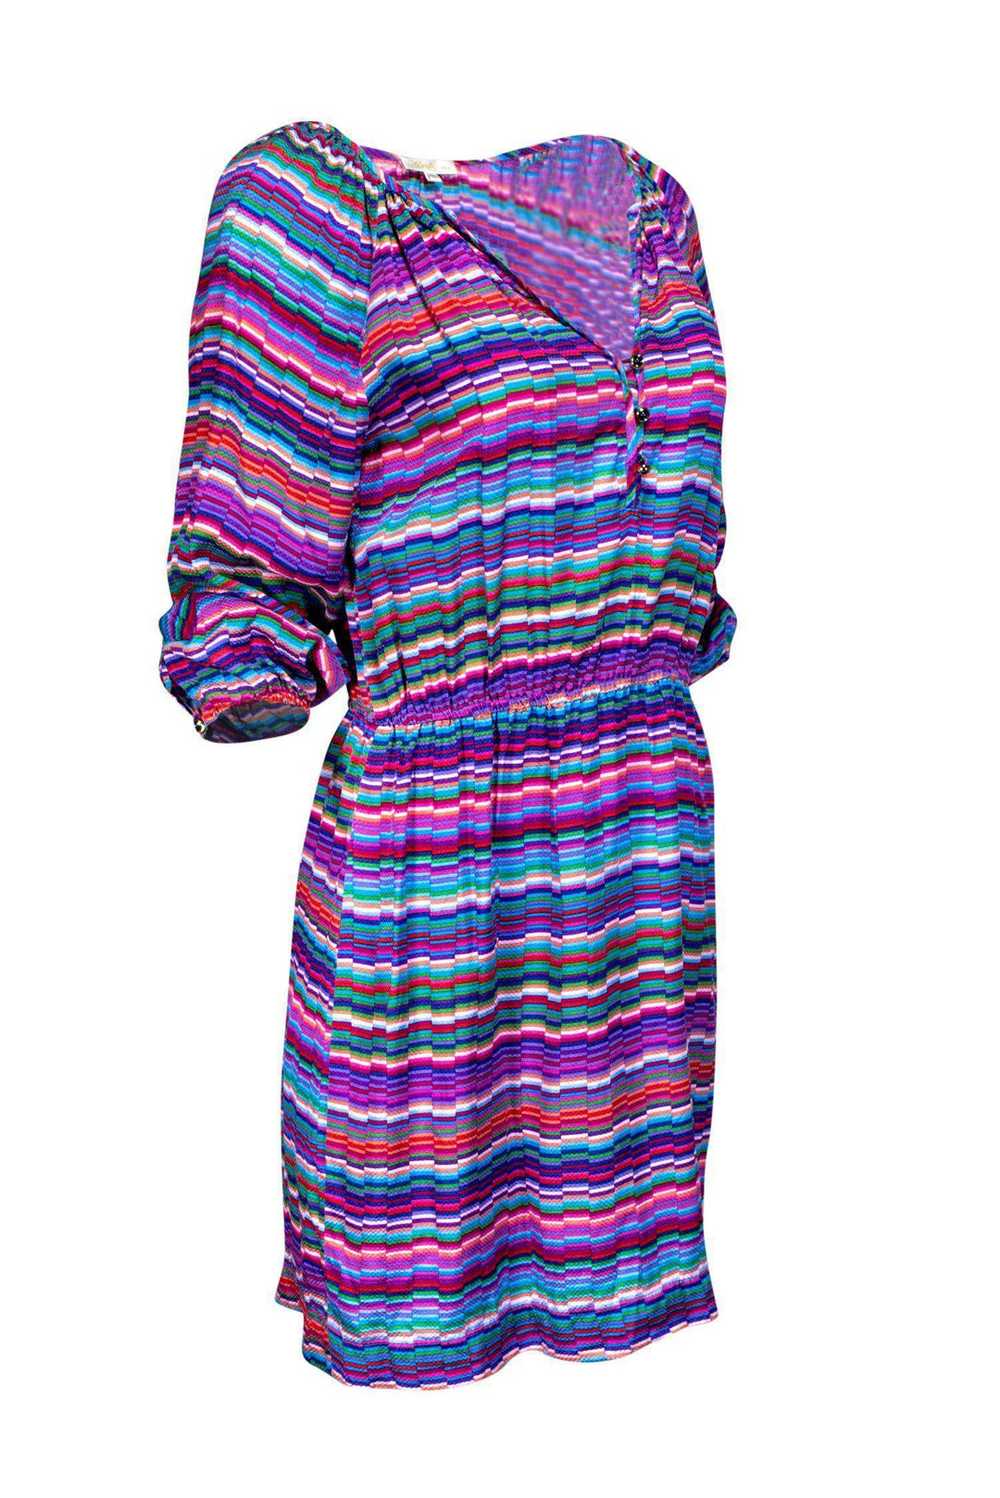 Shoshanna - Multicolored Peasant Top Dress Sz 6 - image 2